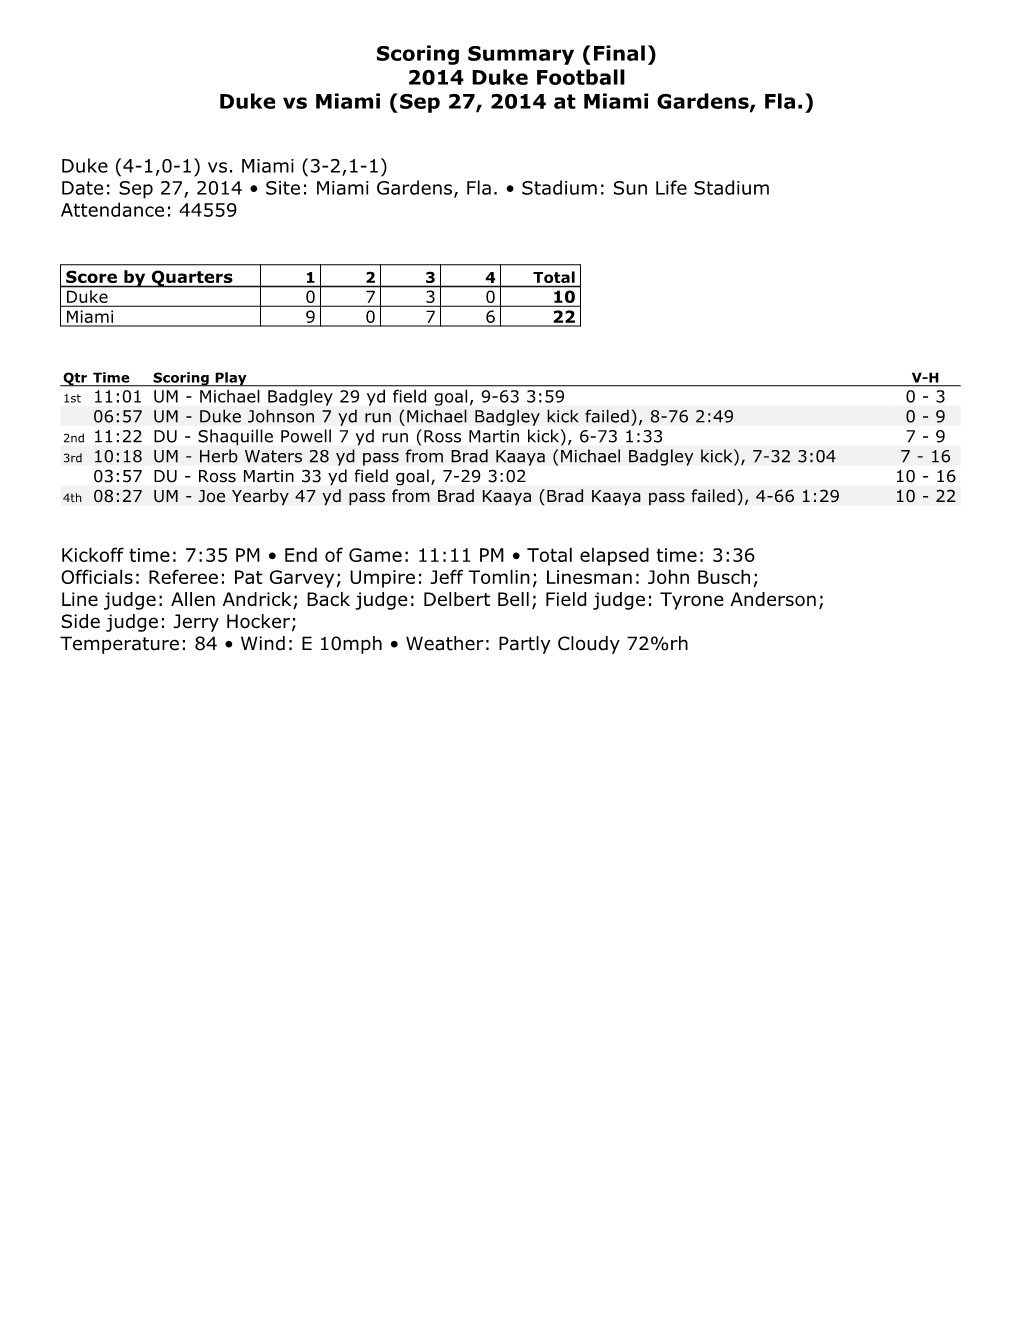 Scoring Summary (Final) 2014 Duke Football Duke Vs Miami (Sep 27, 2014 at Miami Gardens, Fla.)